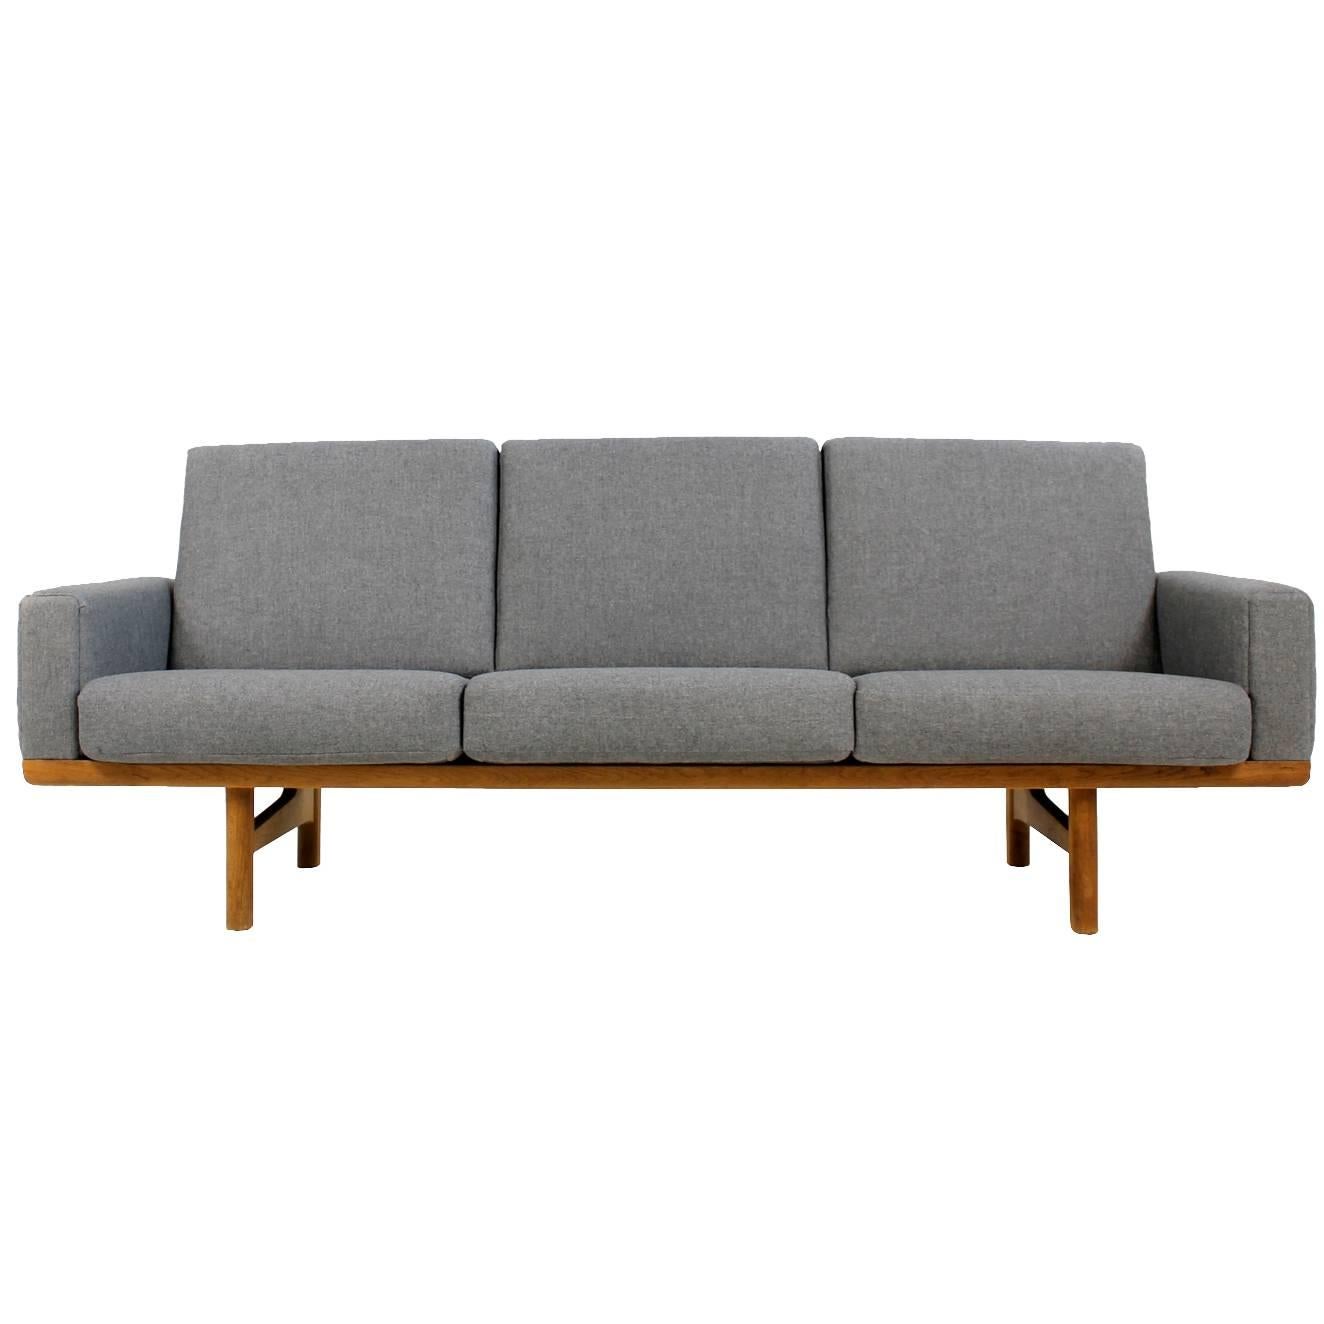 Beautiful Hans J. Wegner Oak Lounge Sofa Mod. 236 Getama Danish Modern Design